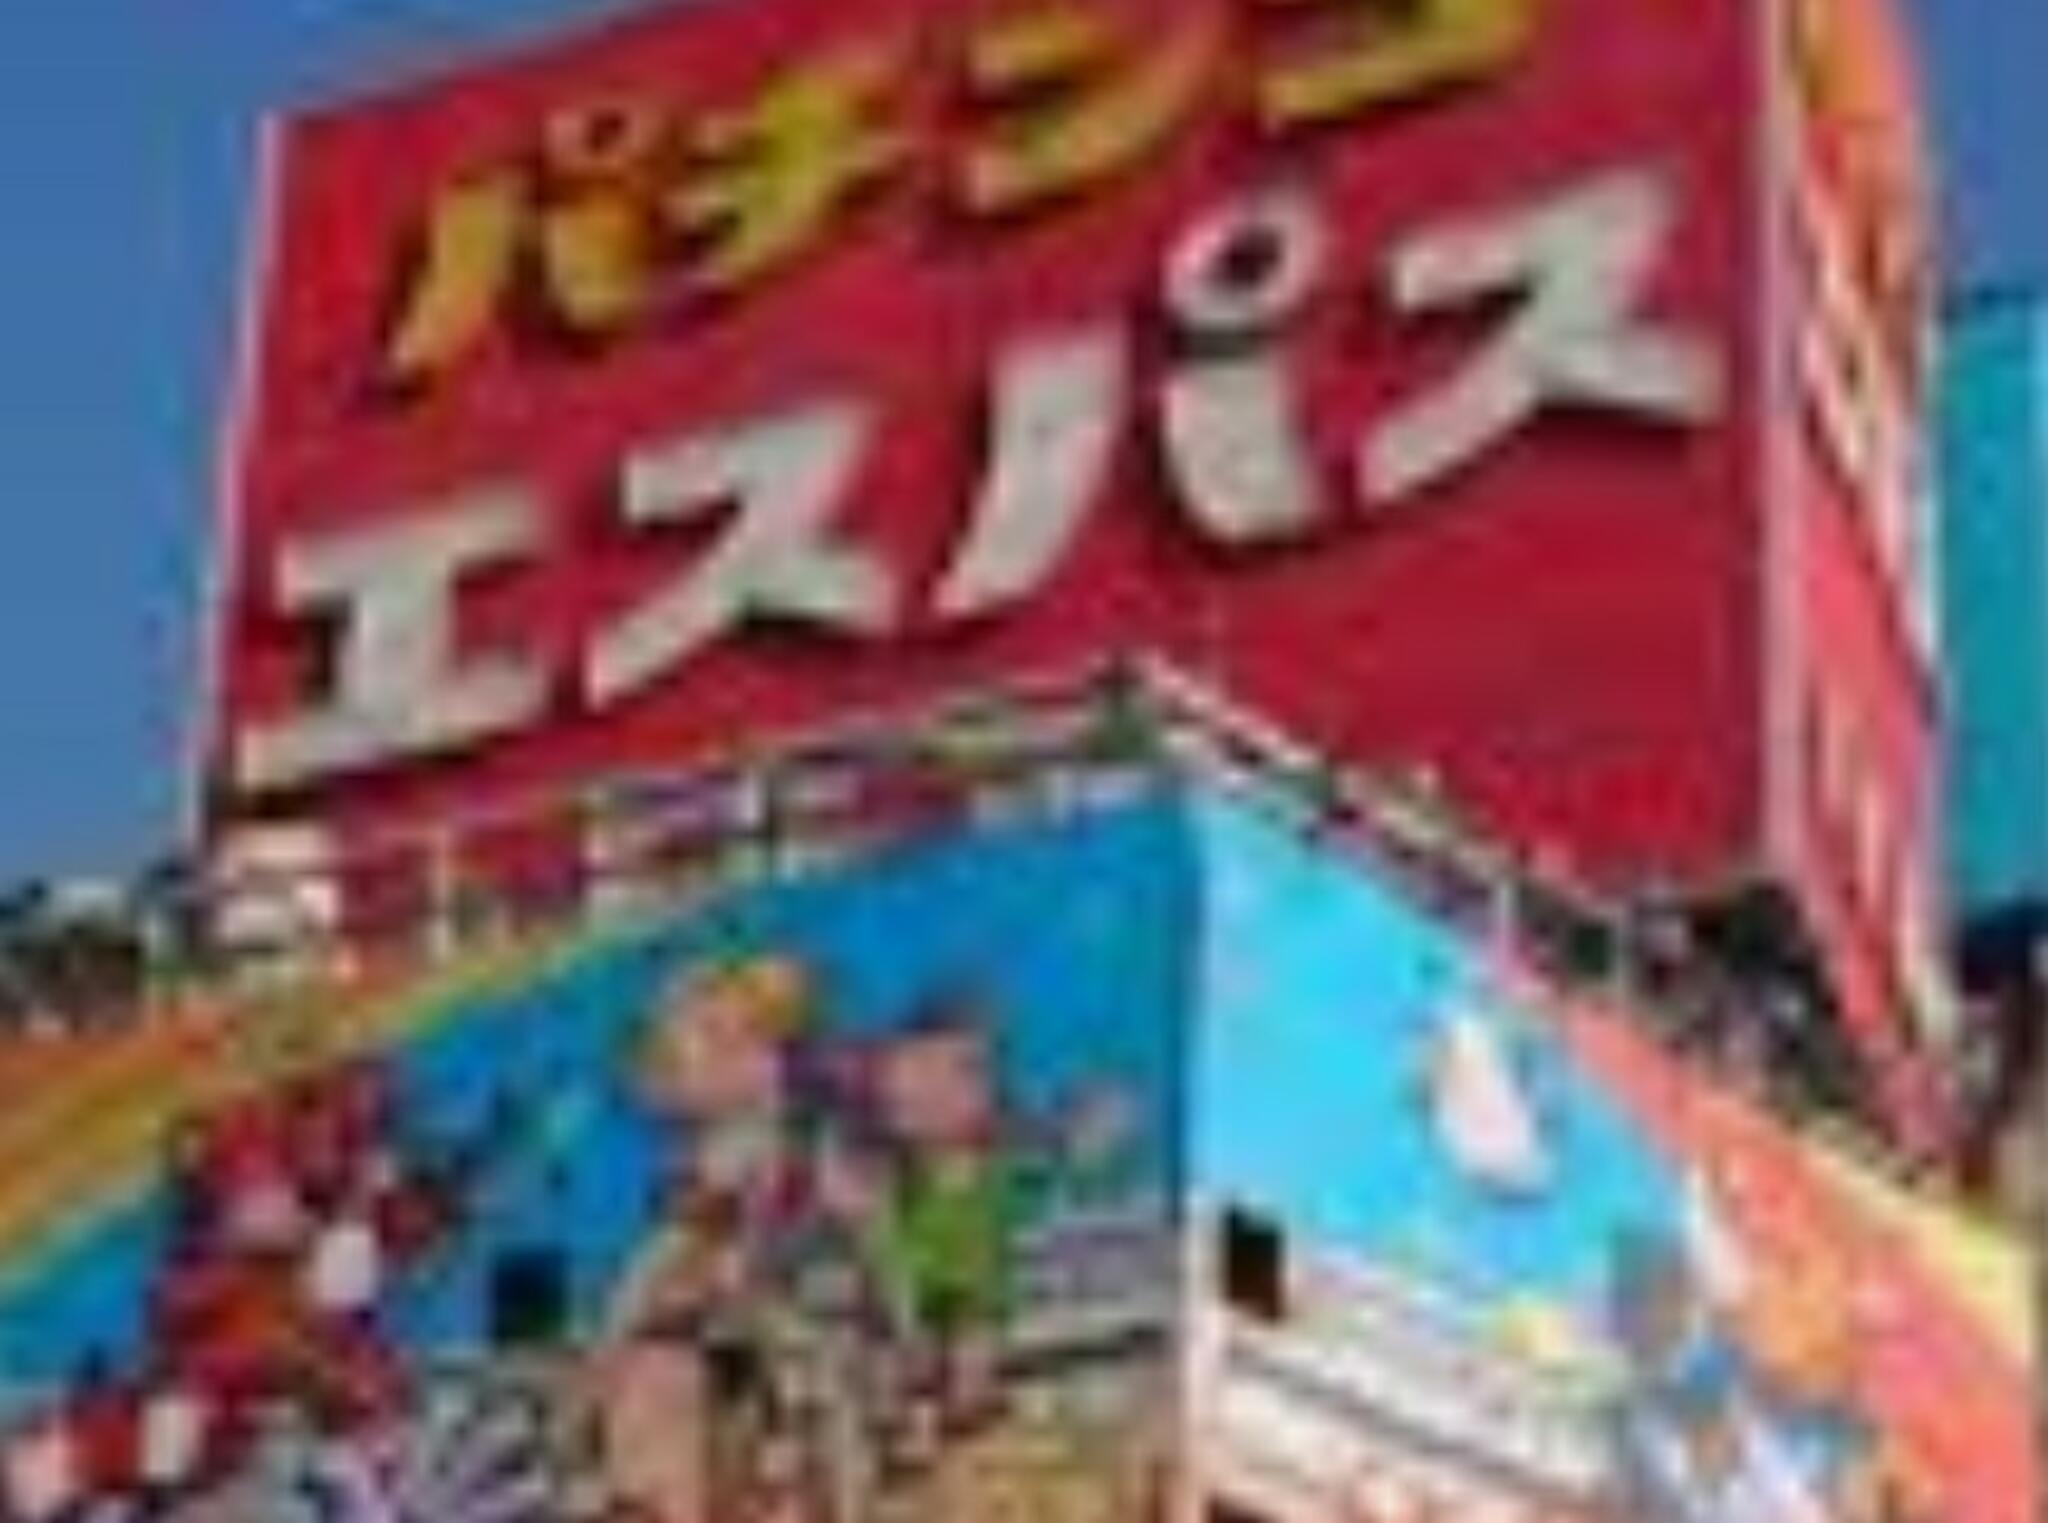 エスパス日拓 新宿歌舞伎町店の代表写真6